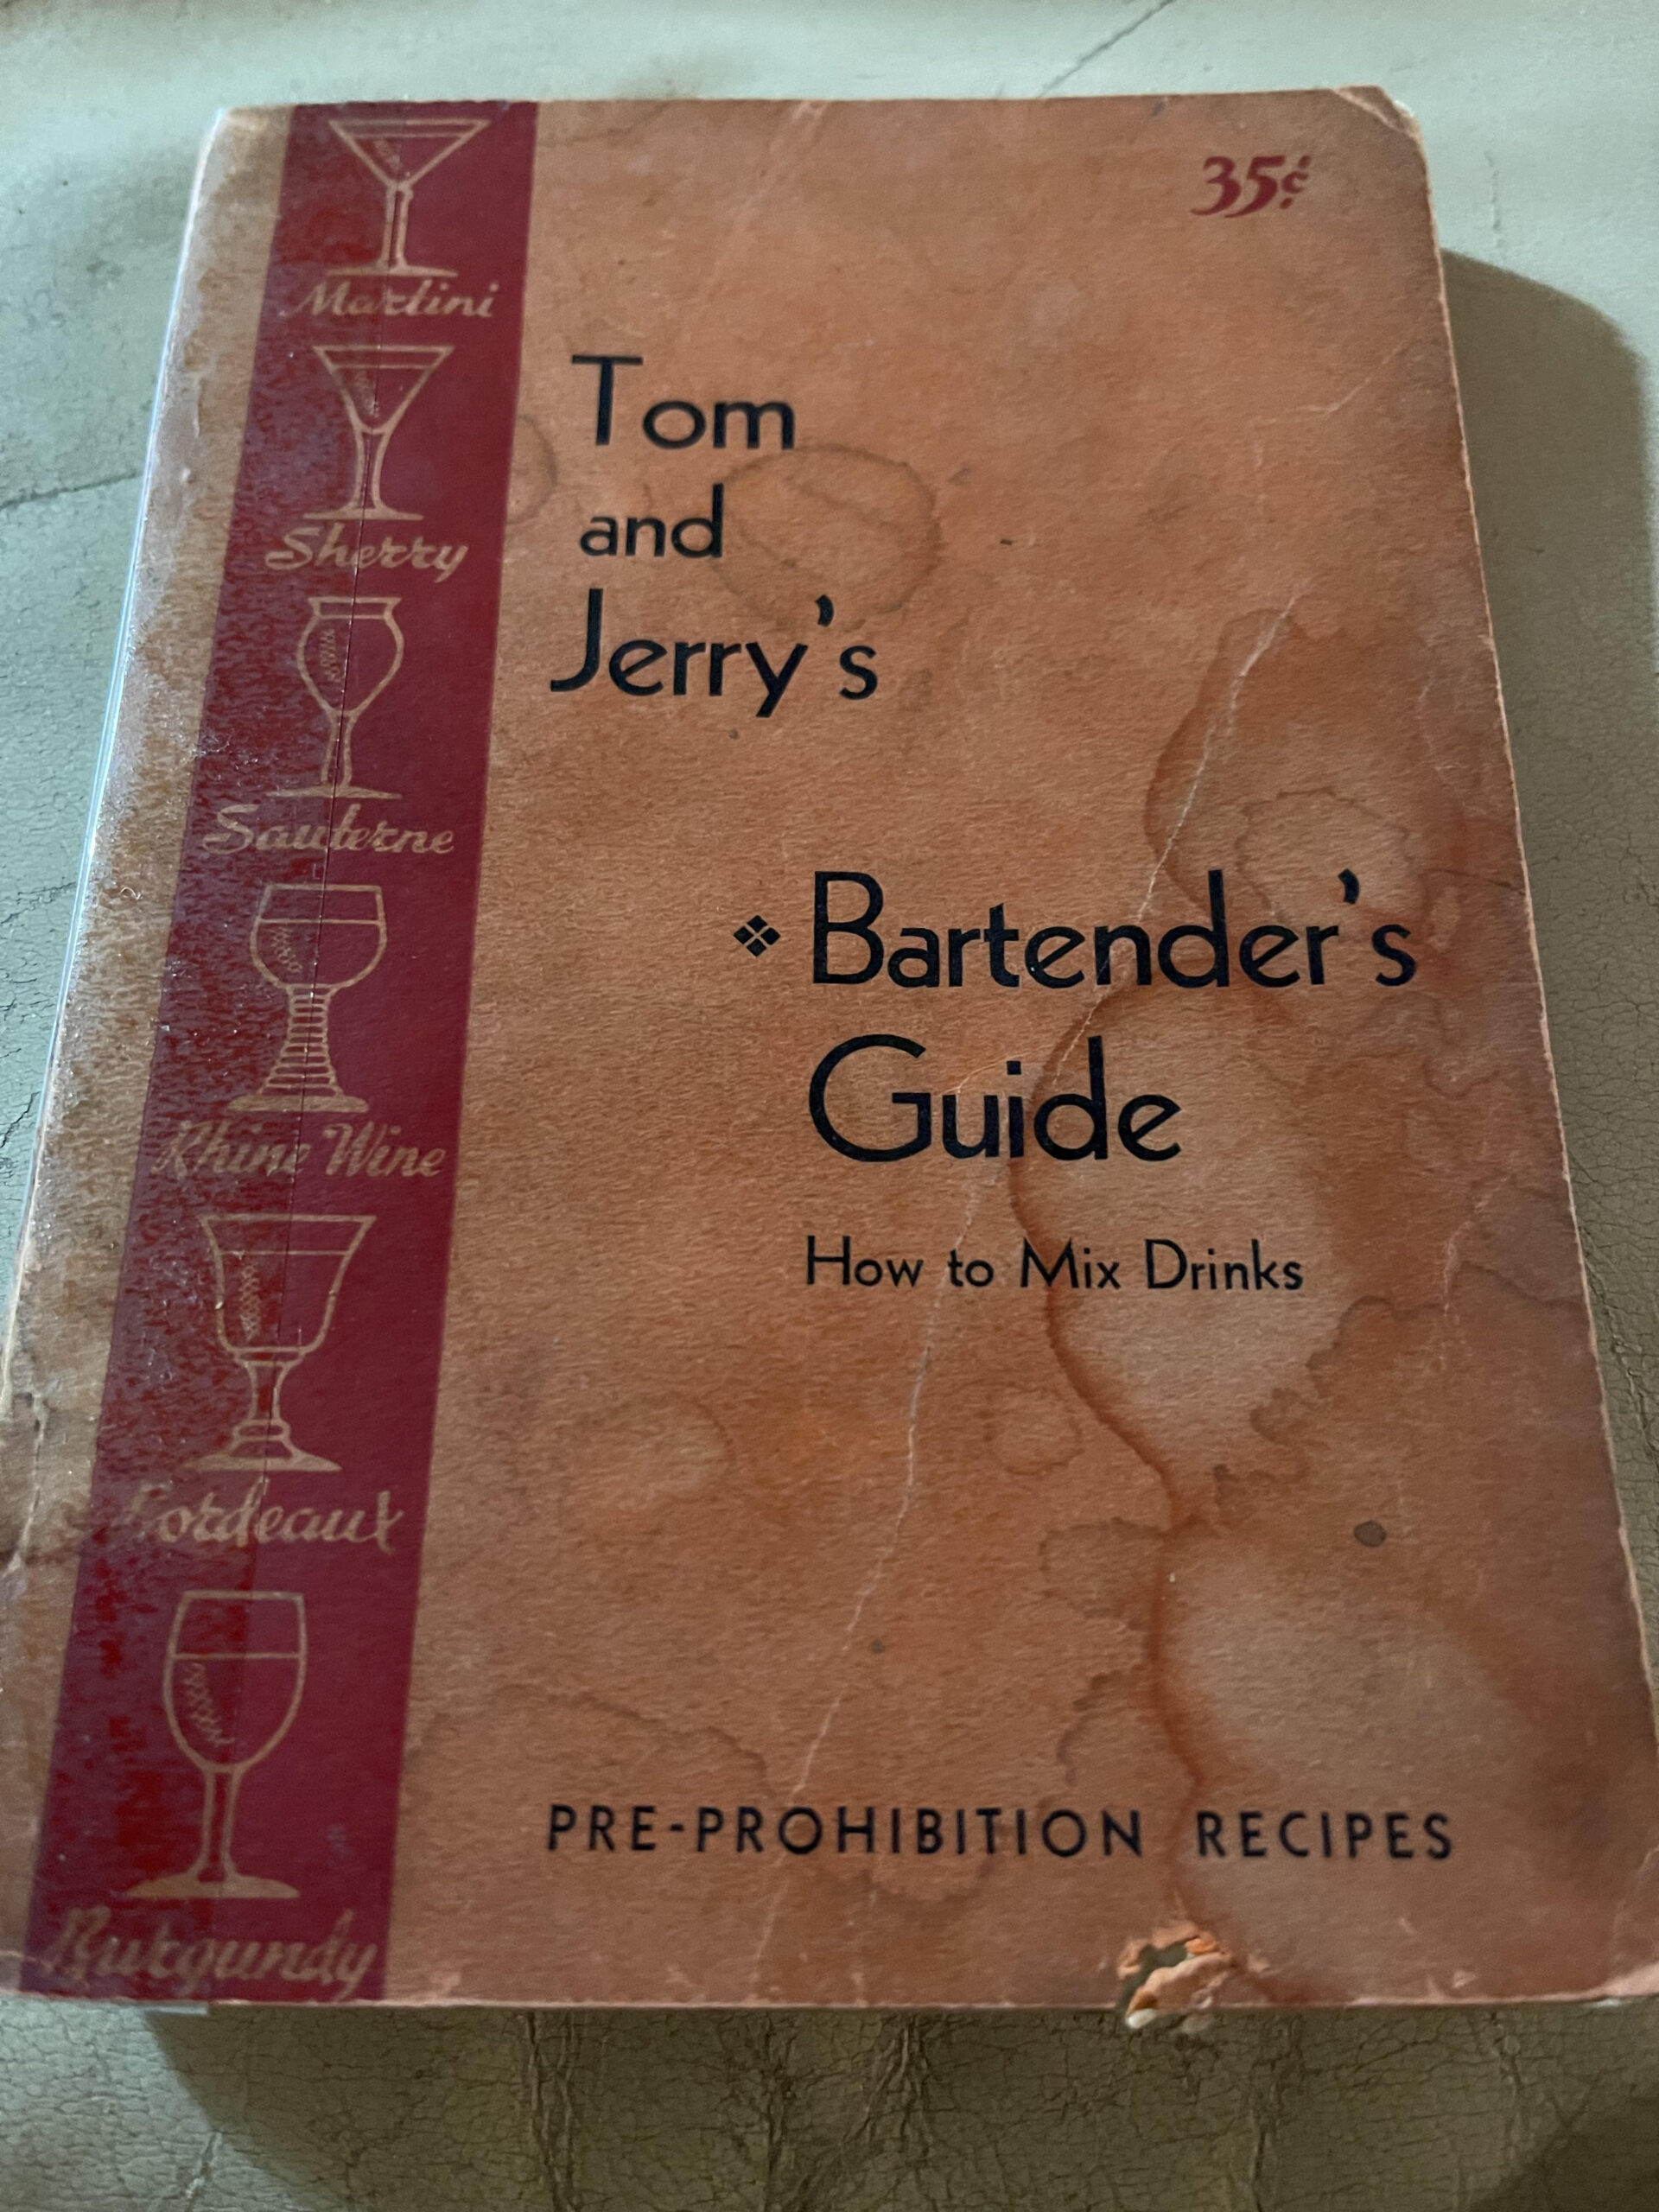 2 Vintage Cocktail Drink Recipe Books Boston Bartender Guide and Benson & Hedges Drink Recipes Old Mr